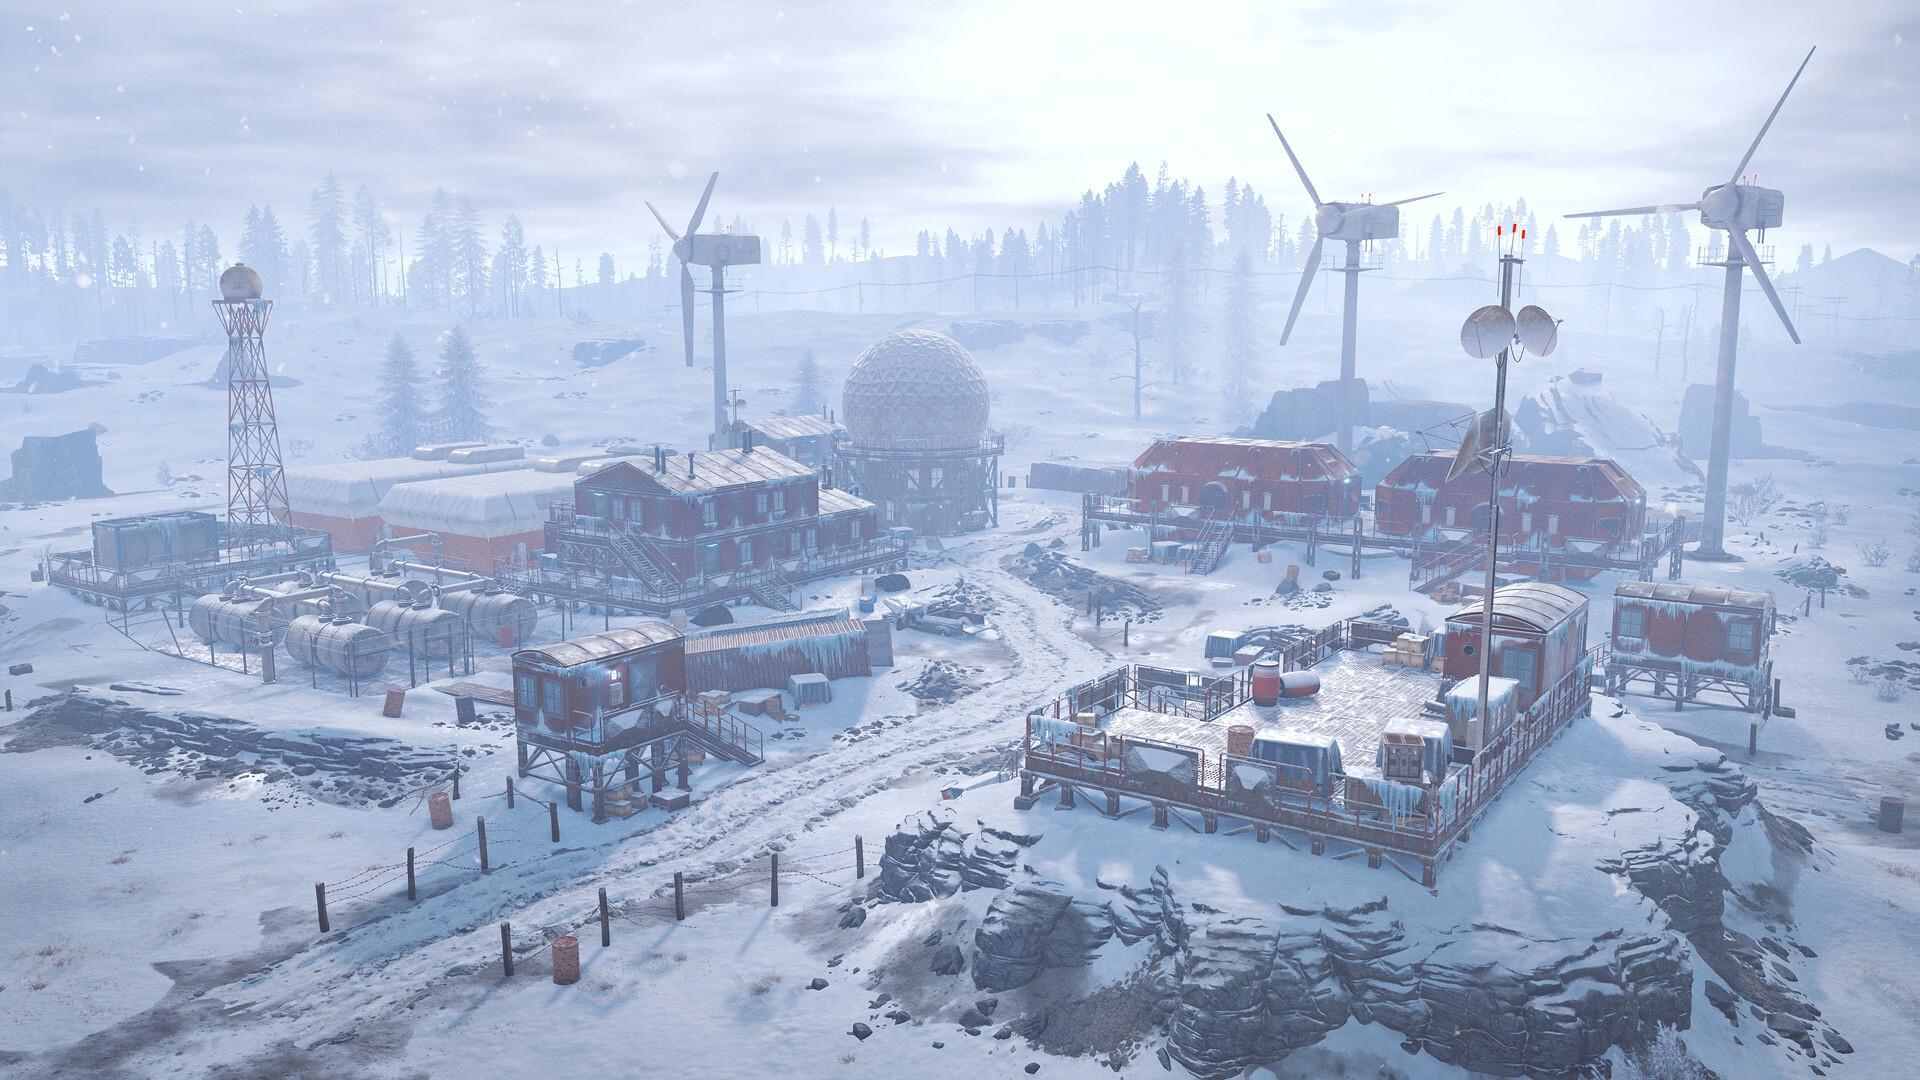 Screenshot №30 from game Rust